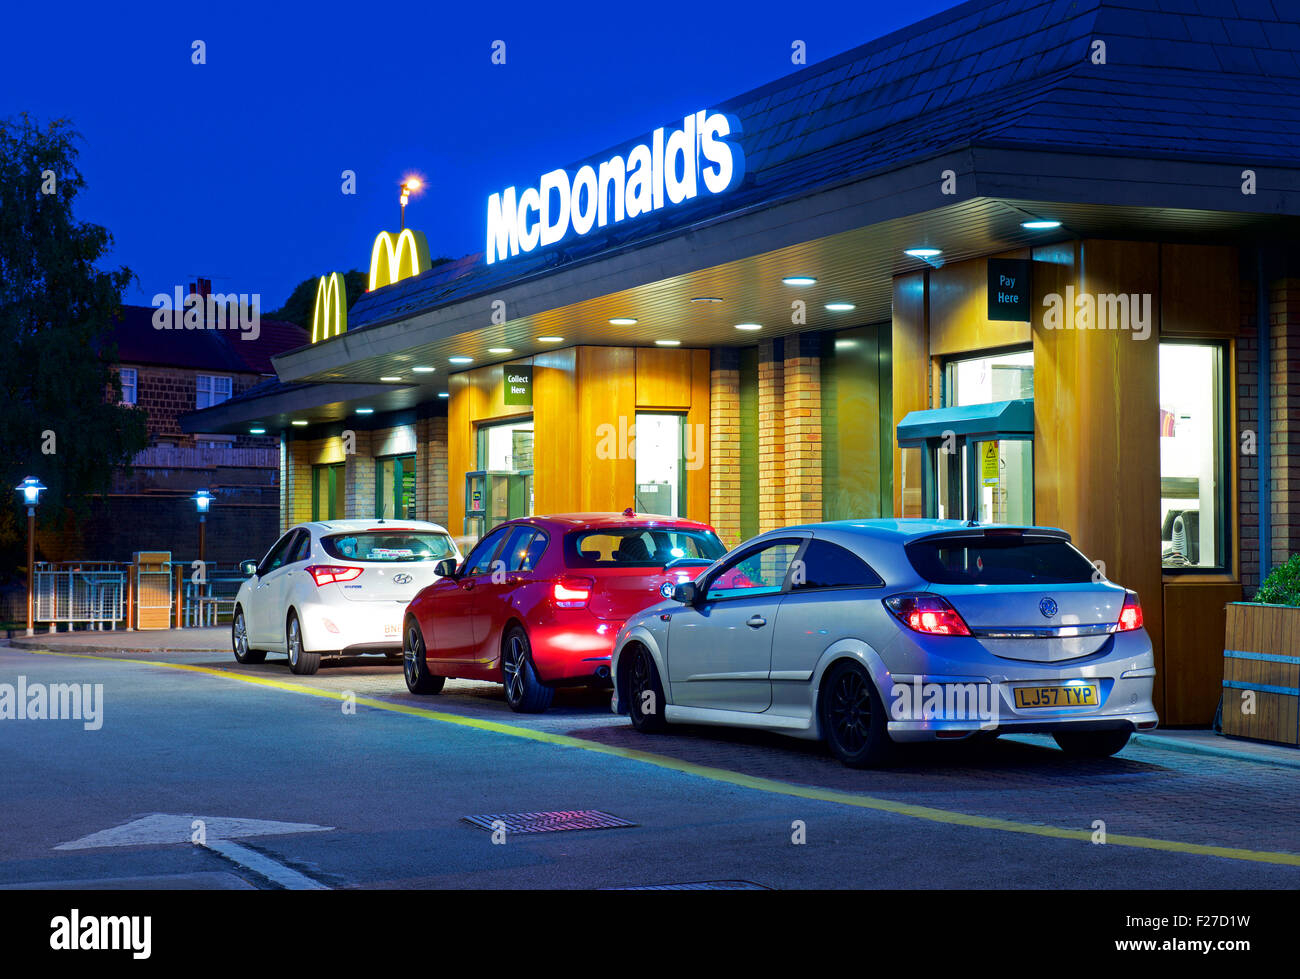 Cars queueing up at McDonald's drive-in restaurant, at night, England UK Stock Photo